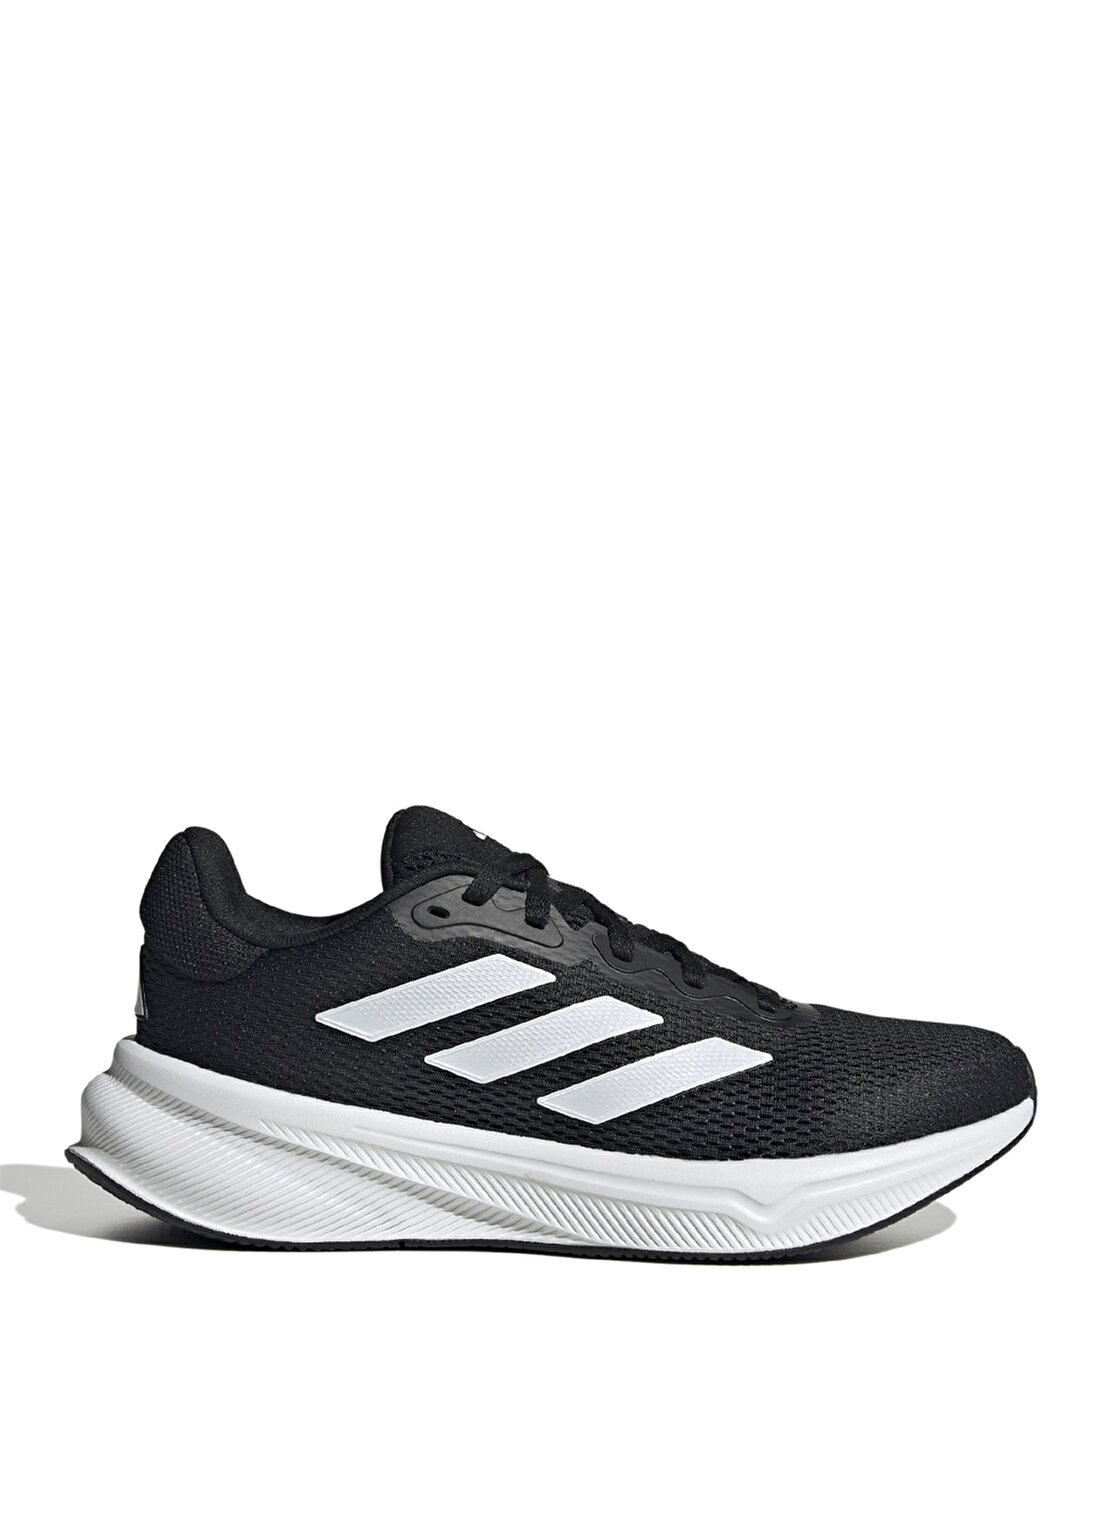 Adidas Siyah Kadın Koşu Ayakkabısı IG1412 RESPONSE